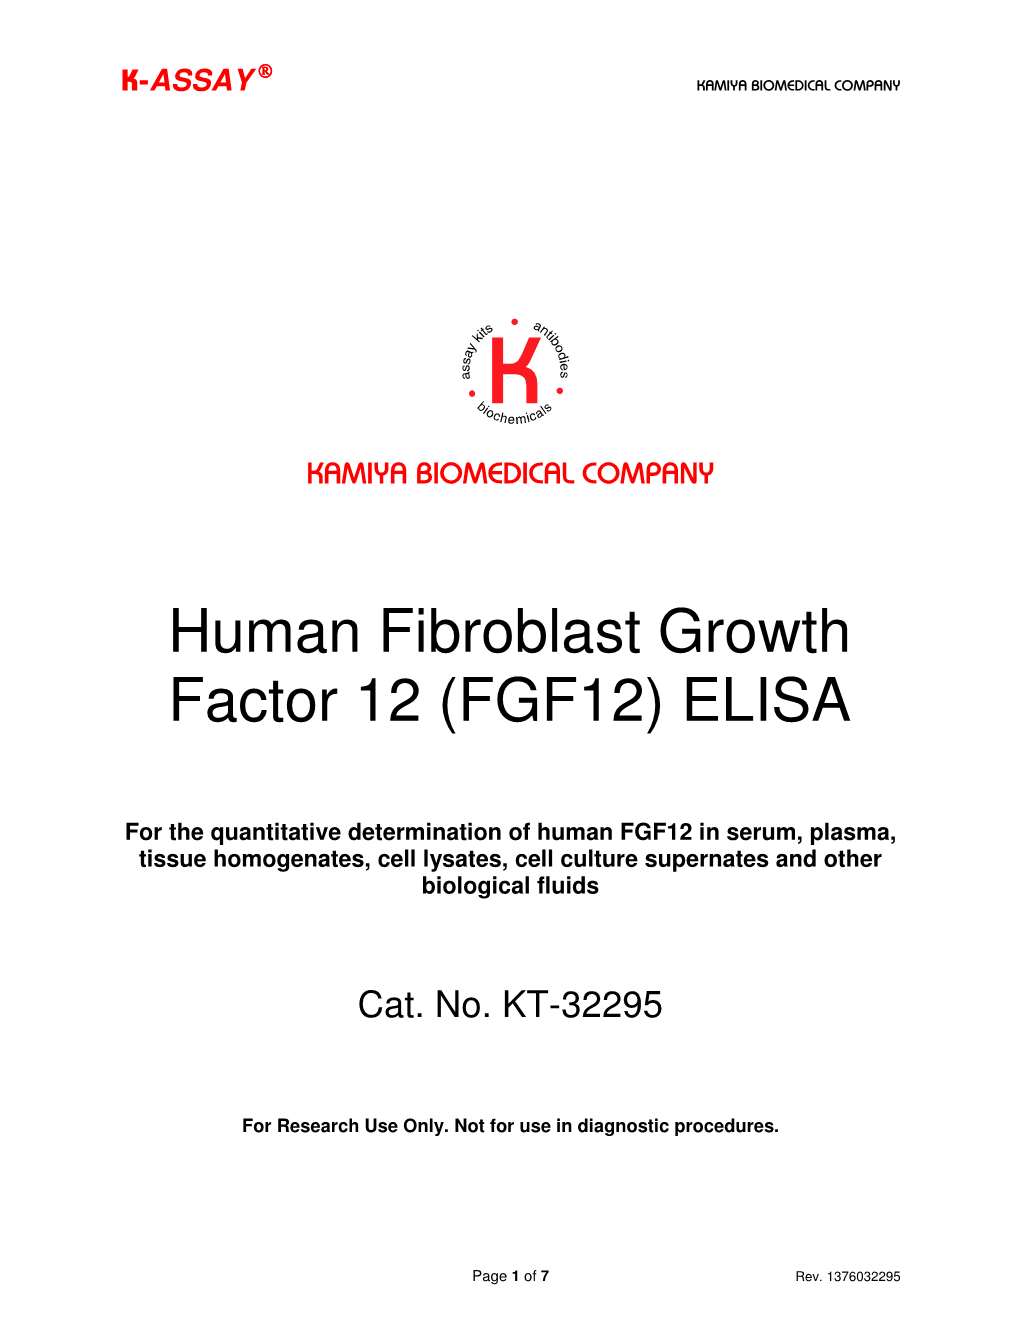 Human Fibroblast Growth Factor 12 (FGF12) ELISA